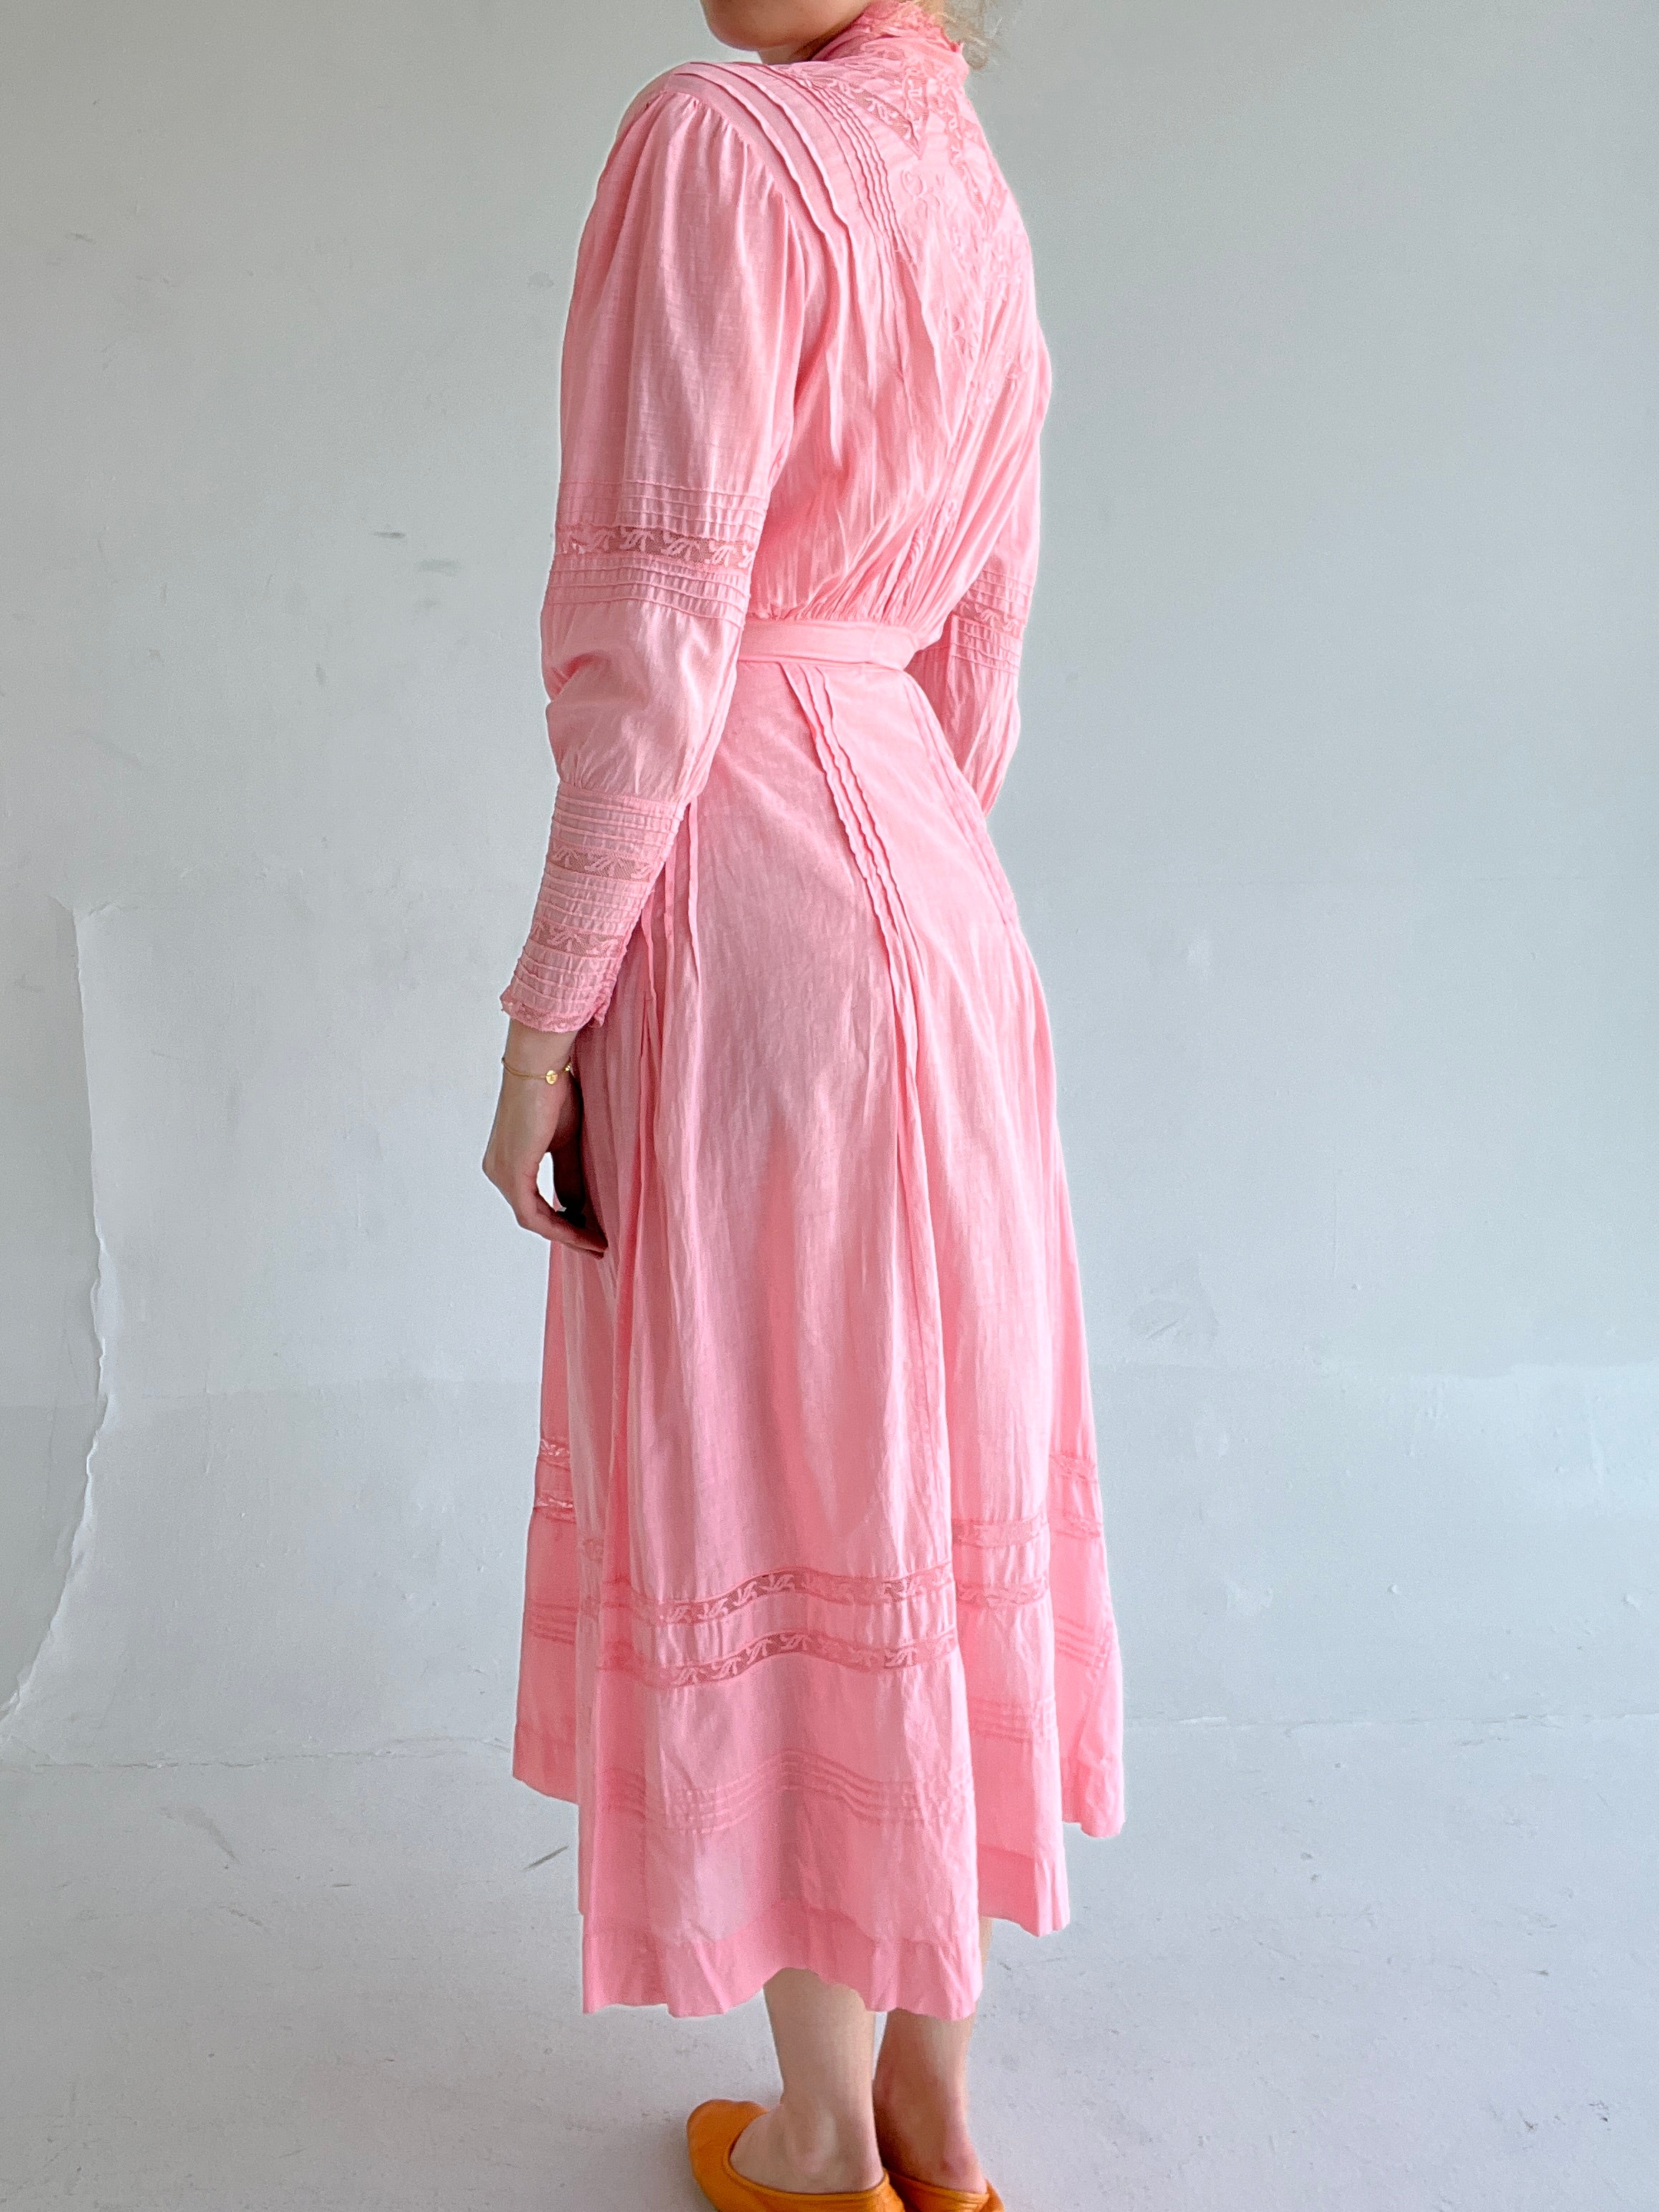 Hand Dyed Pink Cotton Edwardian Dress